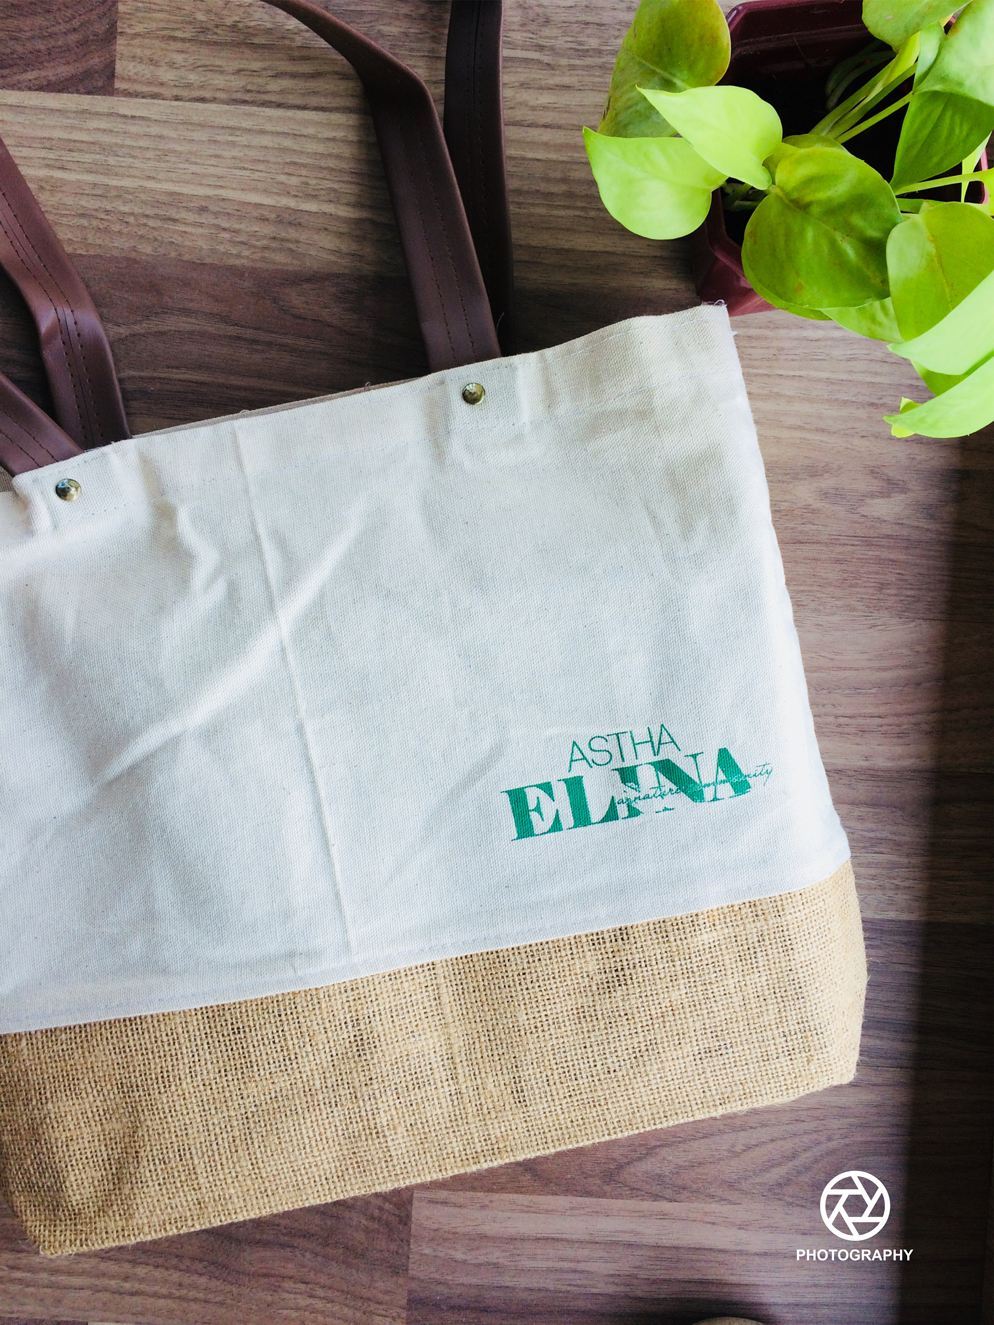 Astha Elina bag design